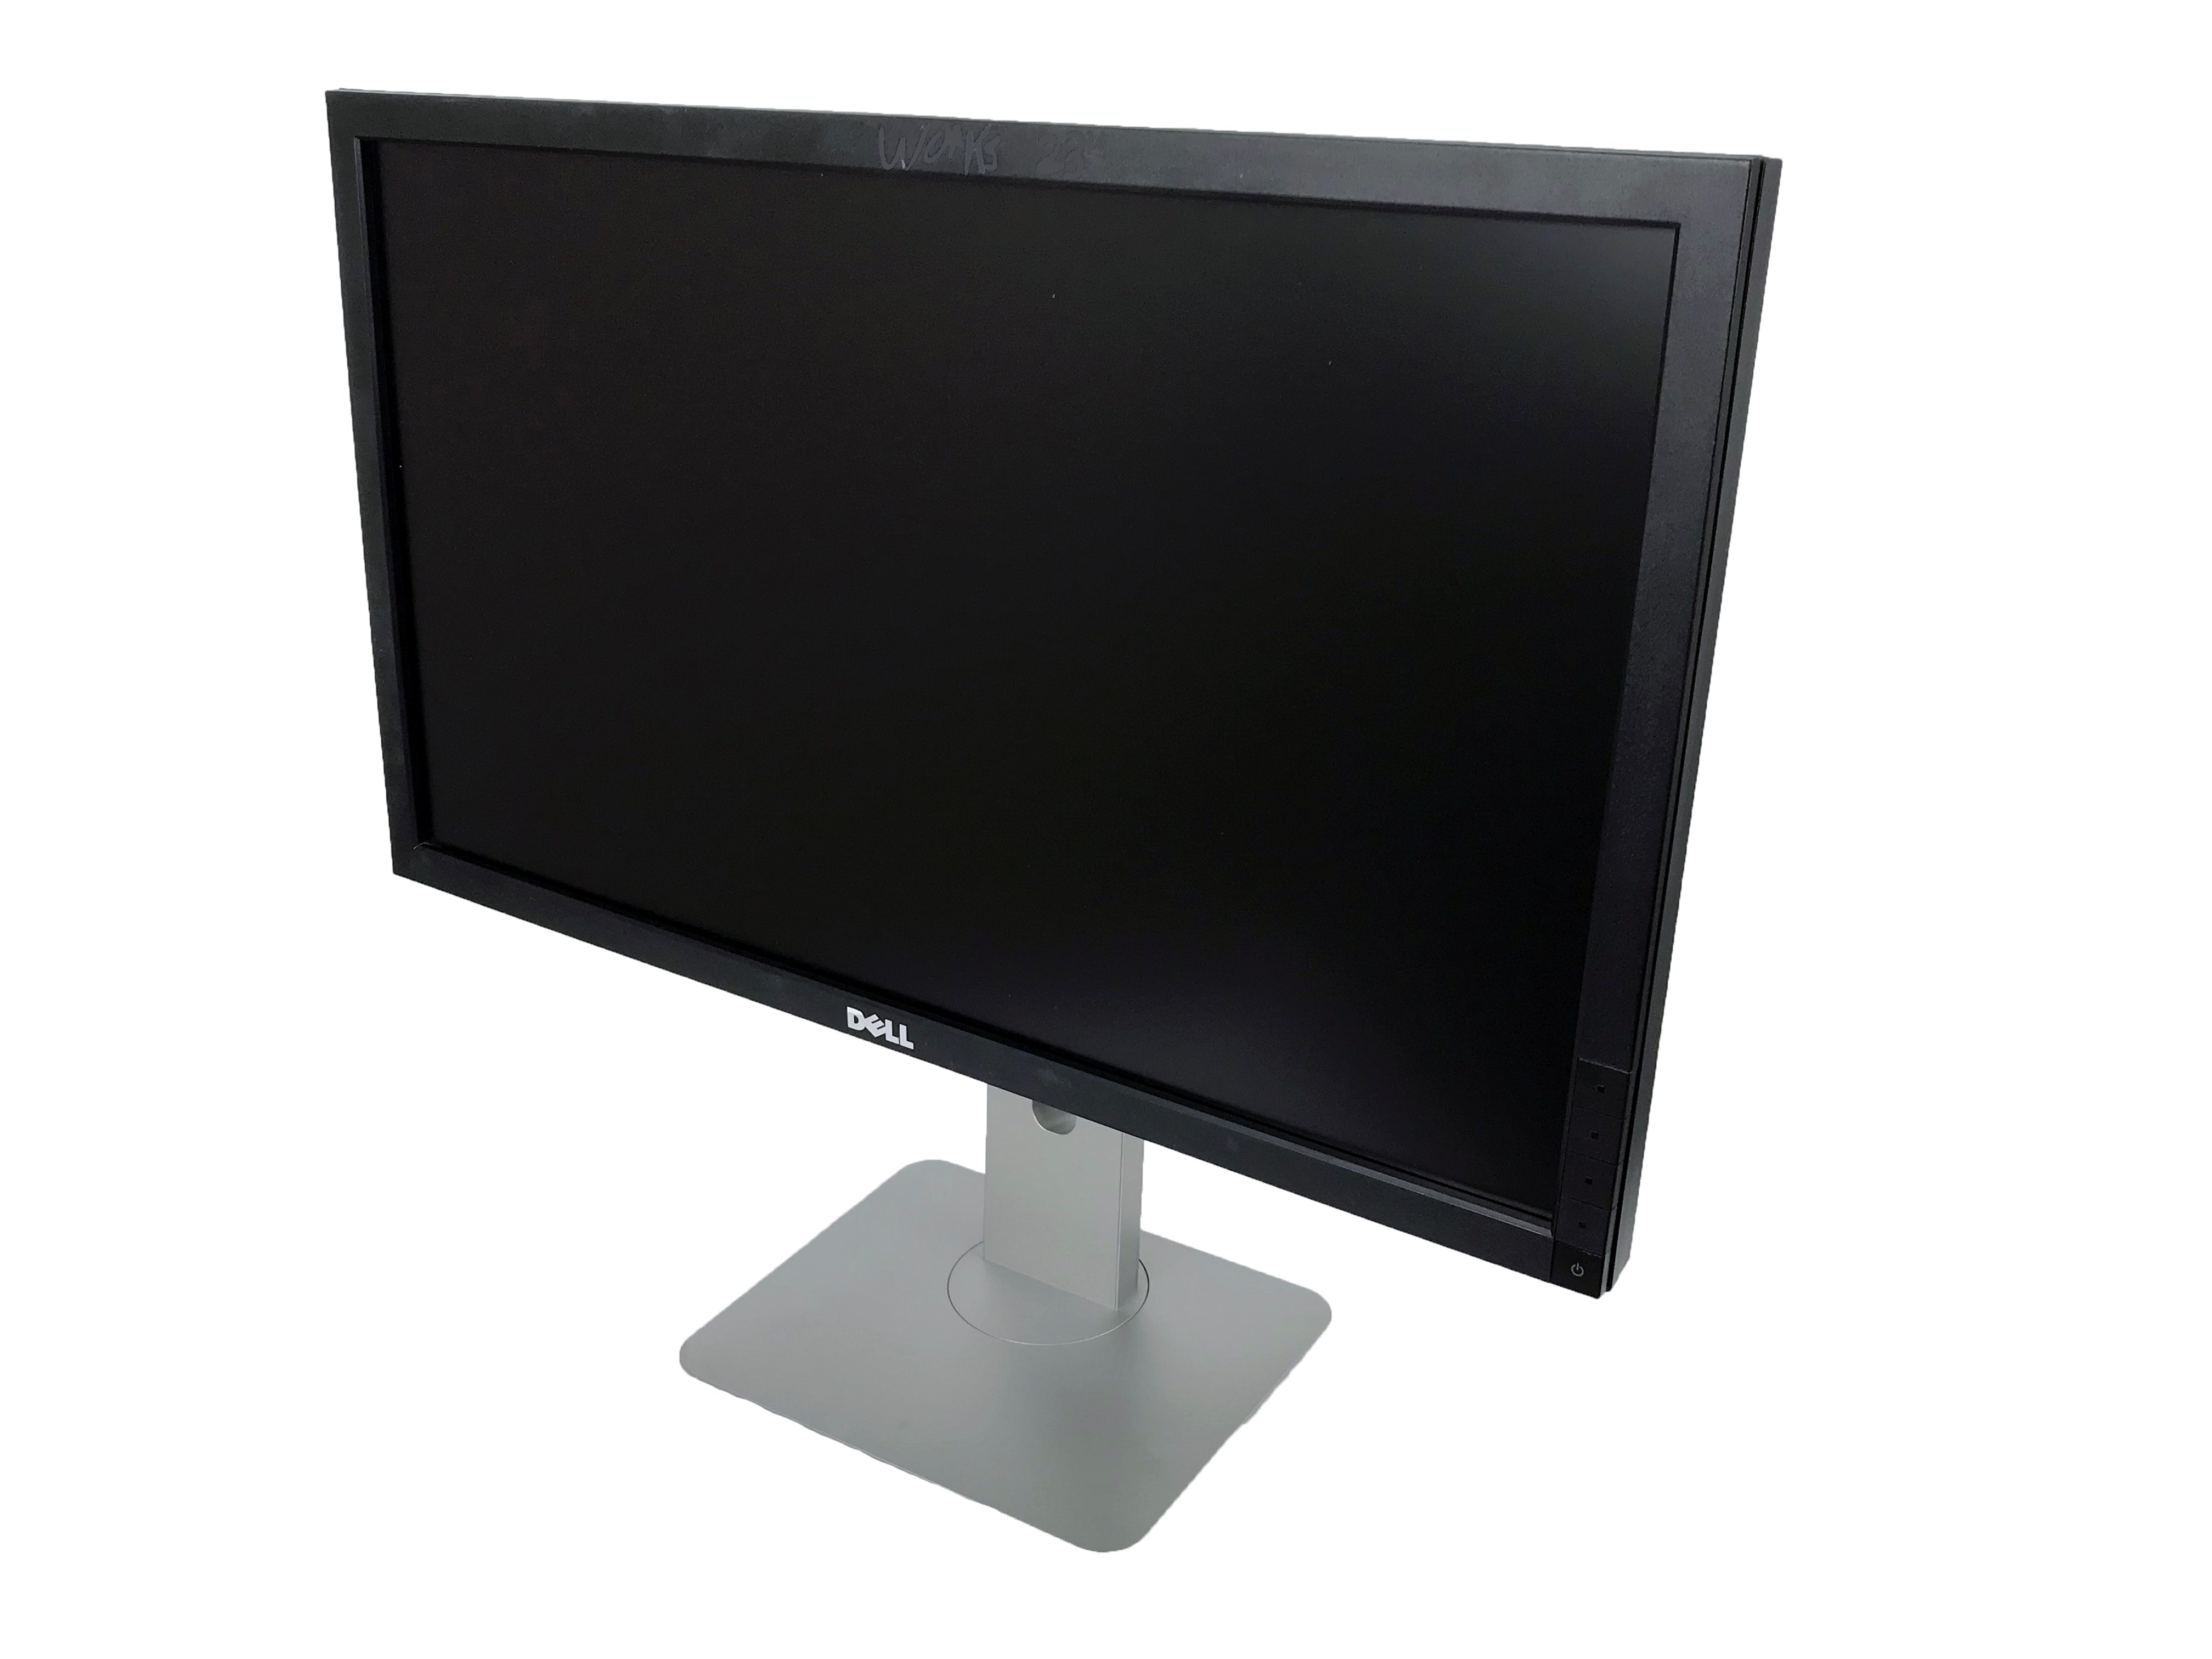 Dell P2311Hb 23" Widescreen LCD Monitor